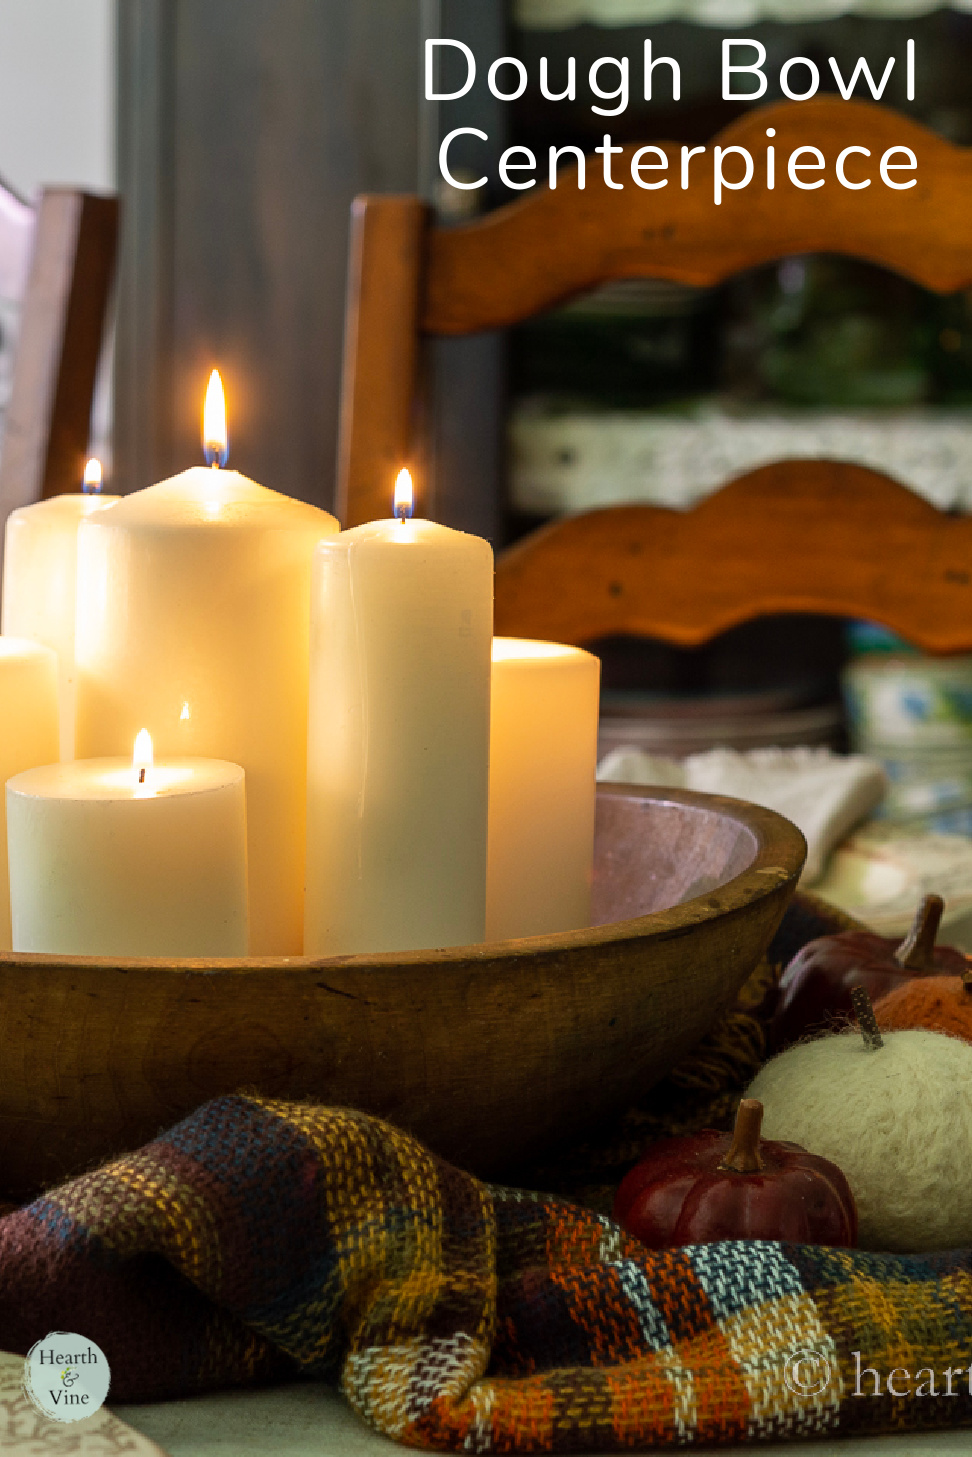 Pillar candles lit in a round dough bowl centerpiece.